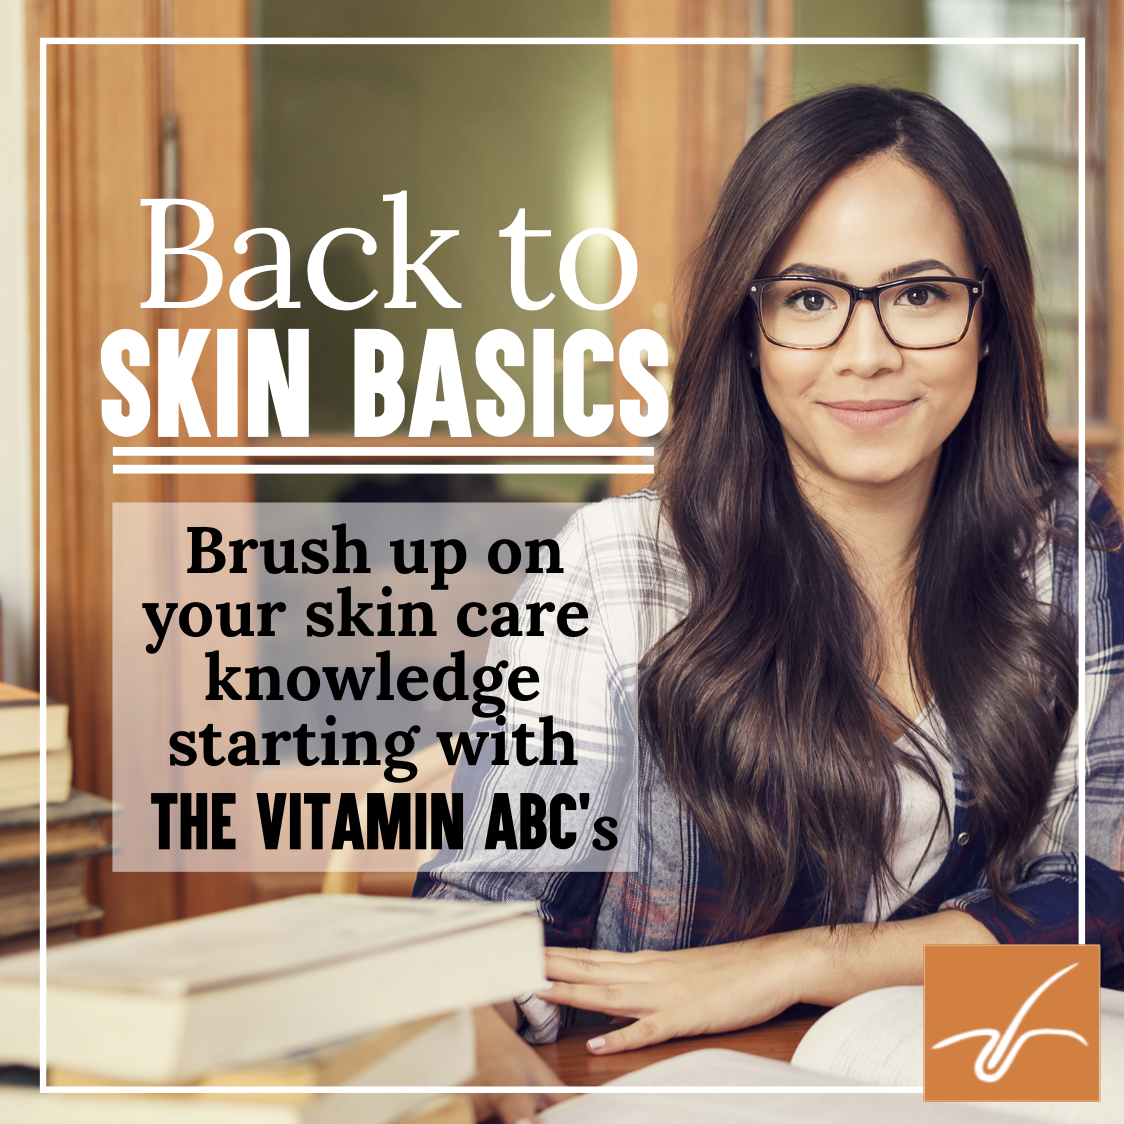 Back to skin basics vitamin ABC